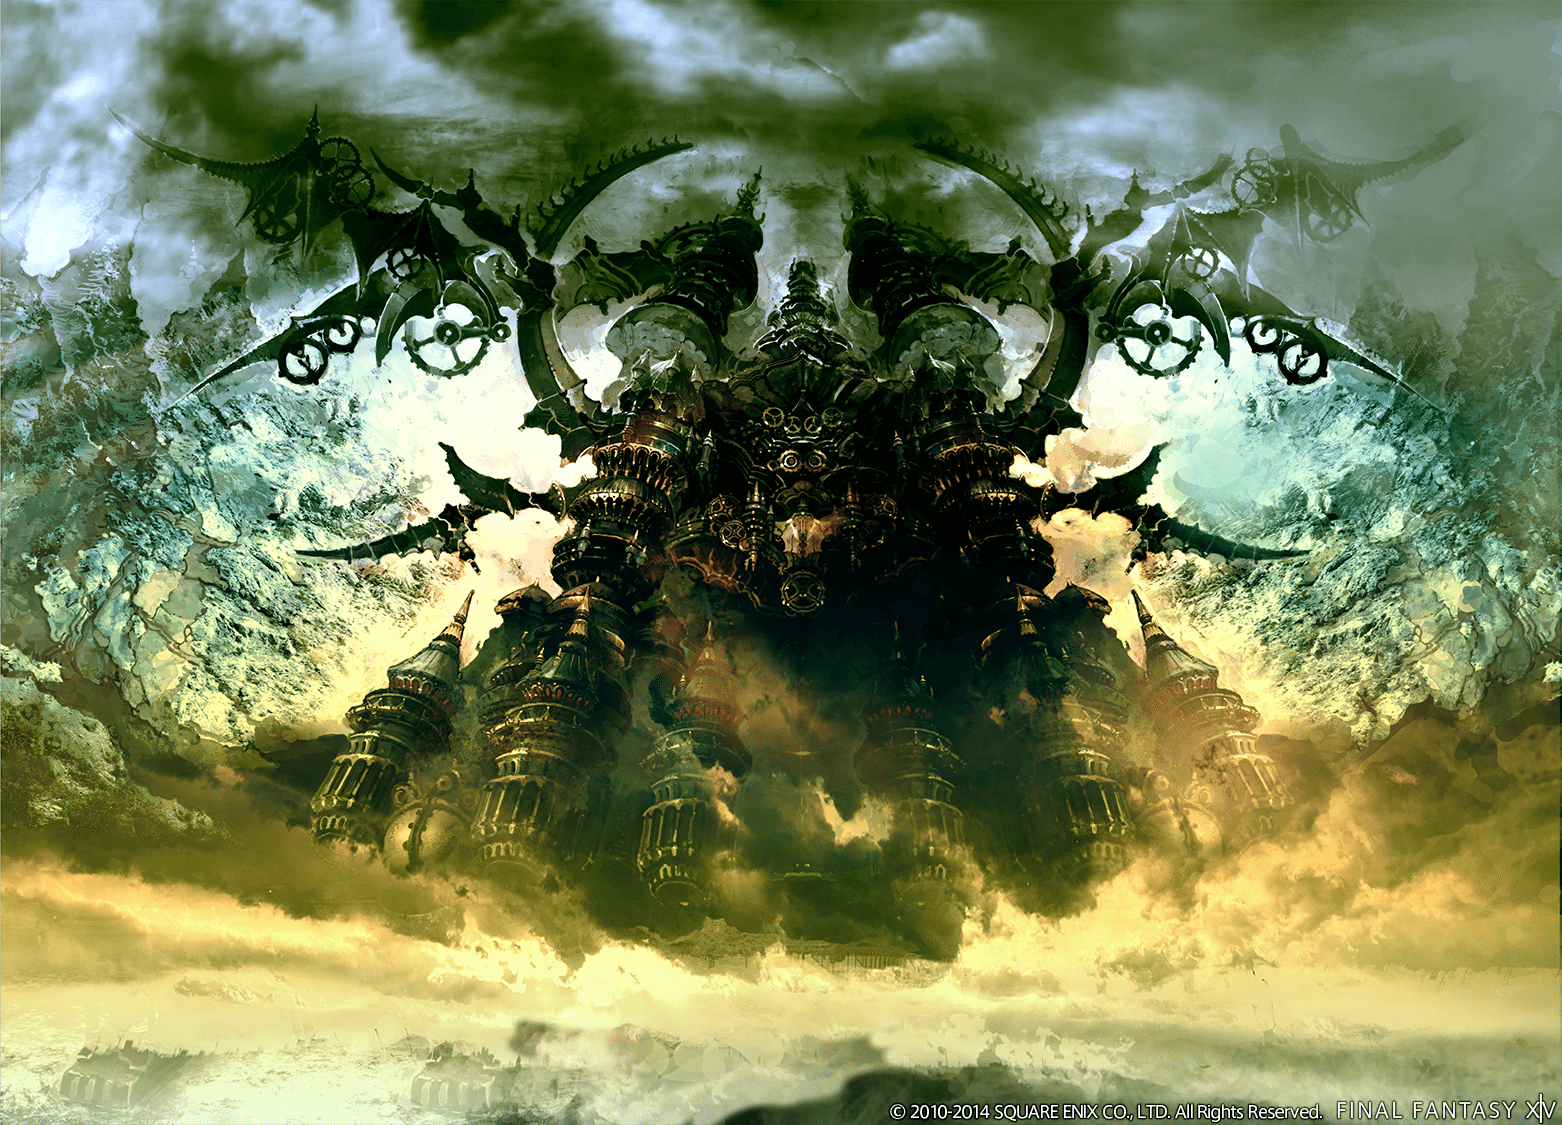 Latest Details on Final Fantasy XIV: Heavensward